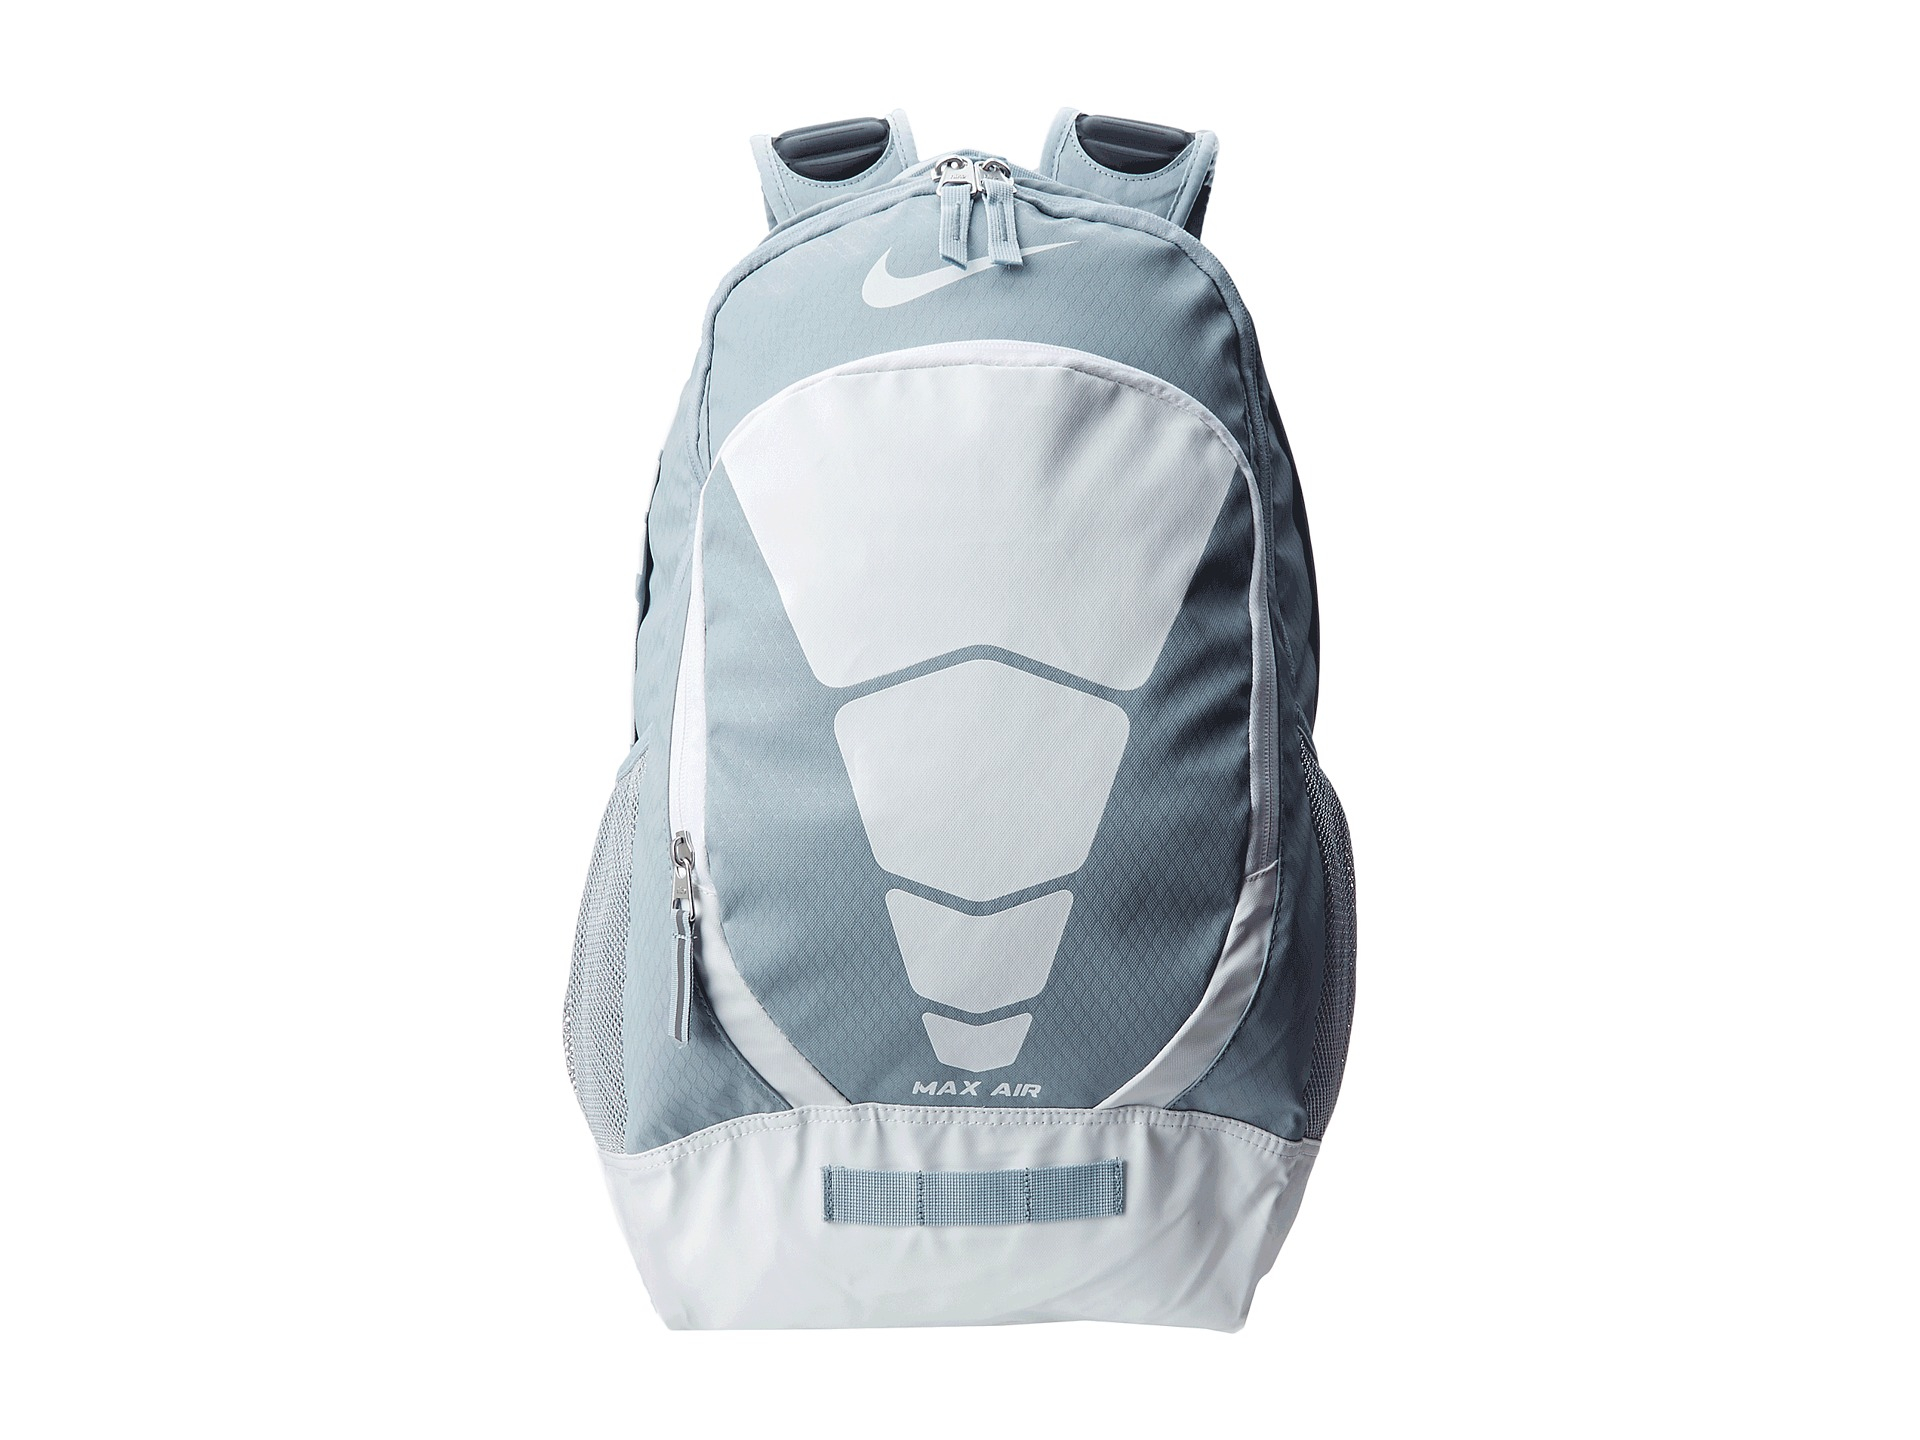 Nike Max Air Vapor Backpack in Grey 